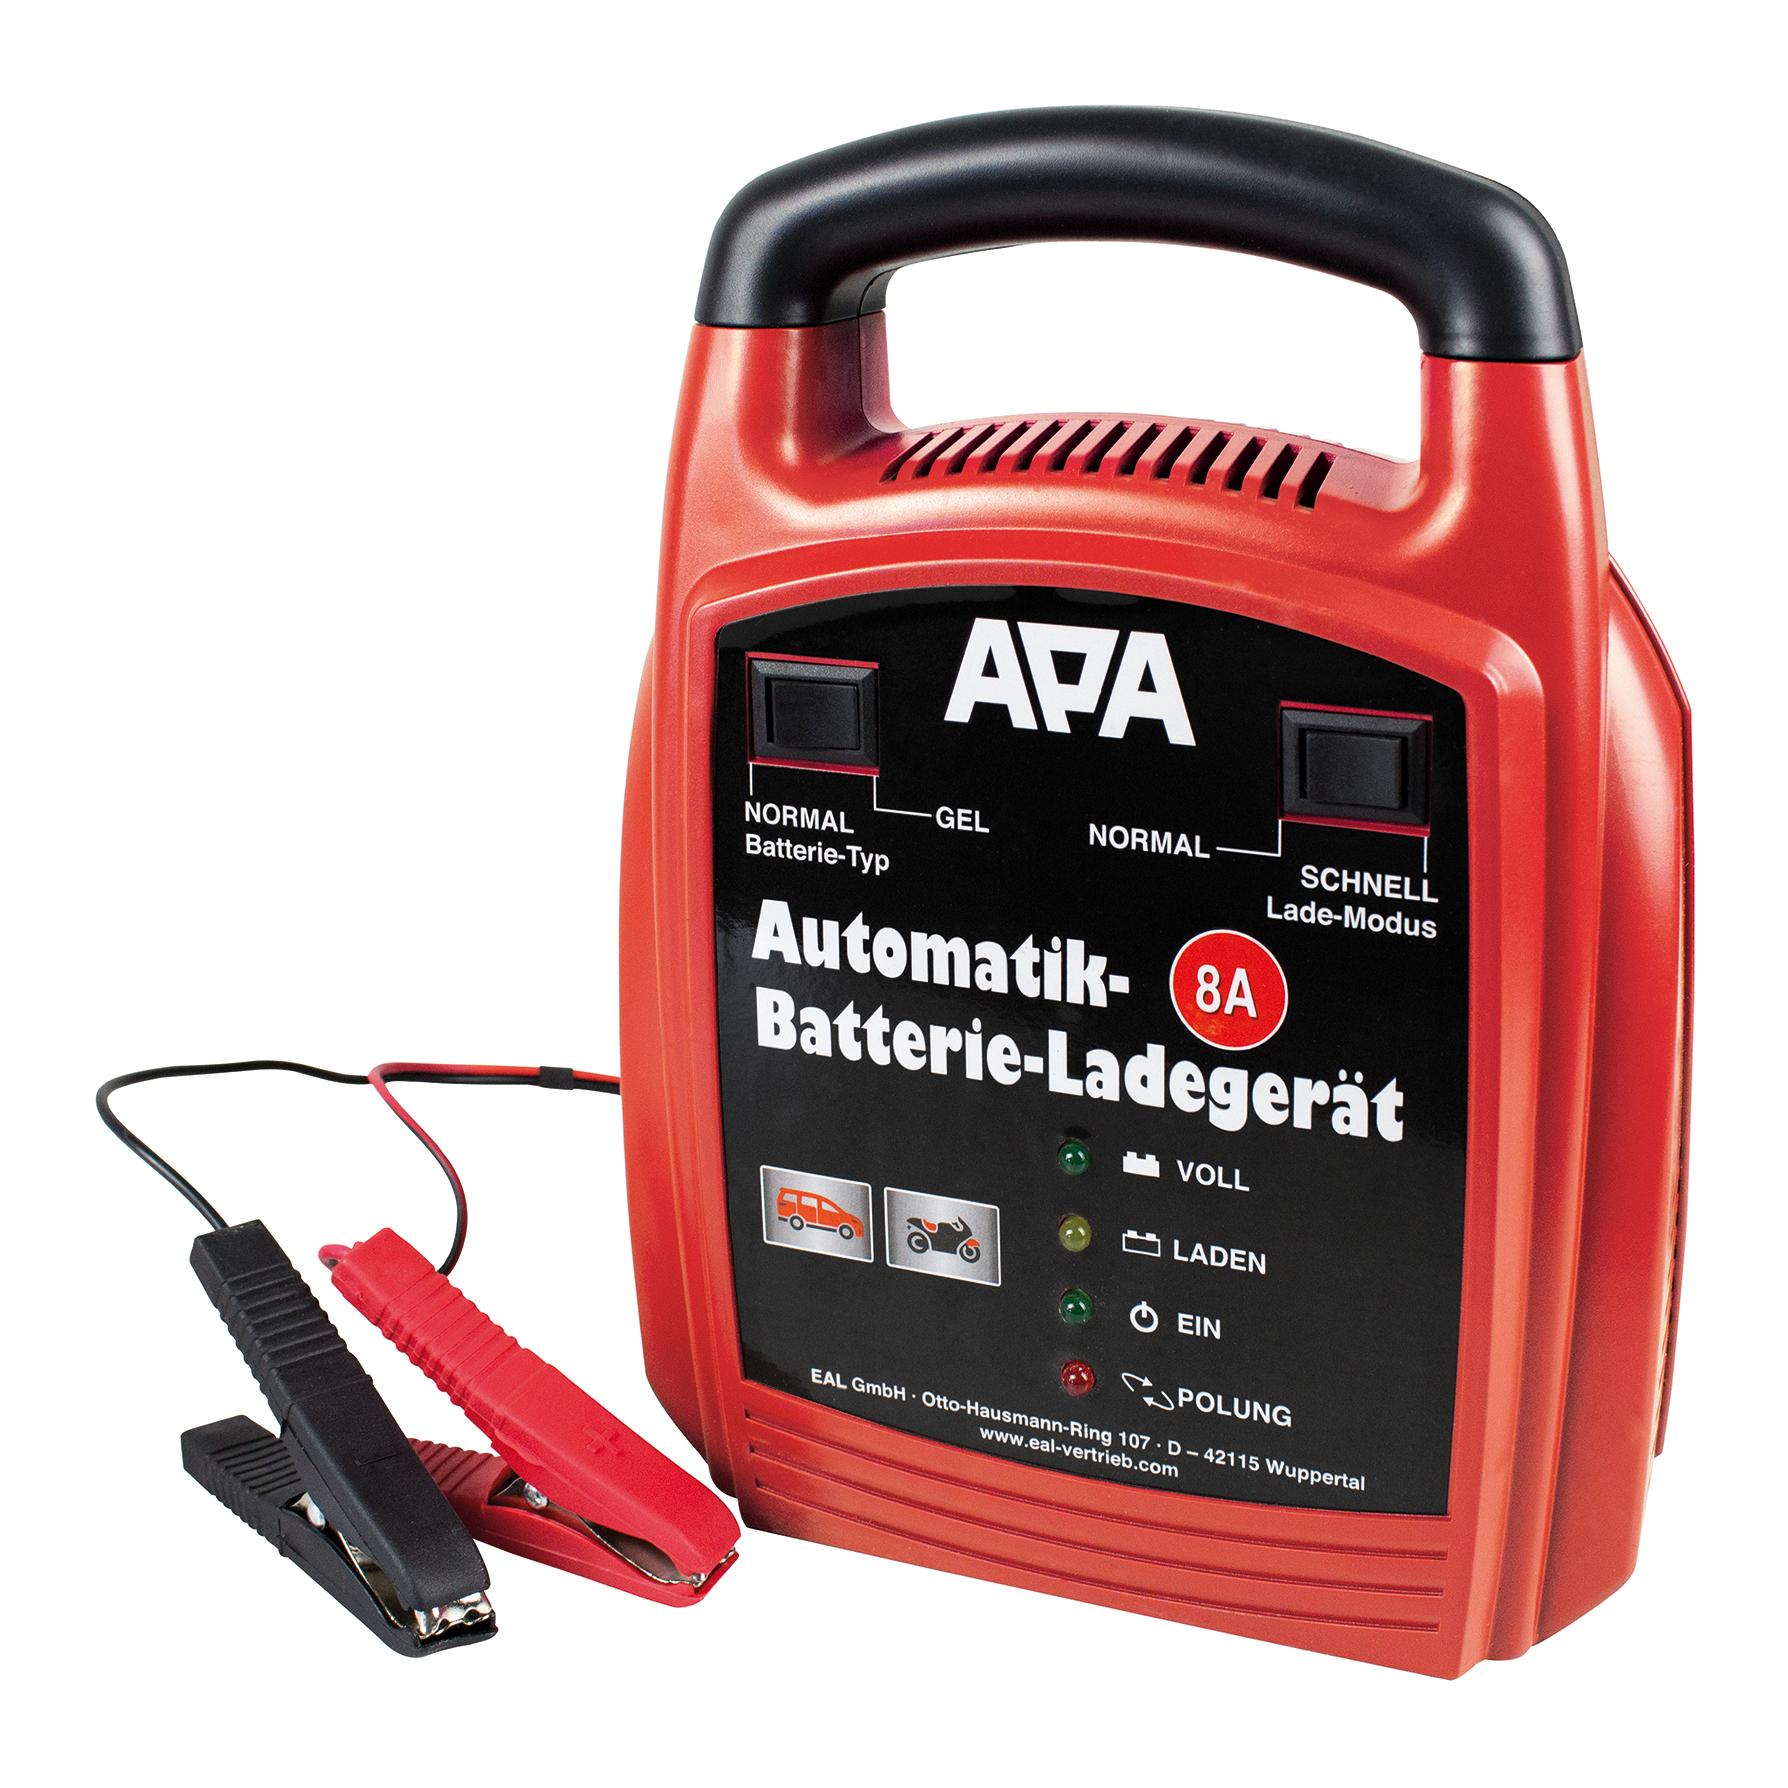 Image of APA Automatik Batterie-Ladegerät 12V 8A - Rot/Schwarz - bei Hauptner.ch